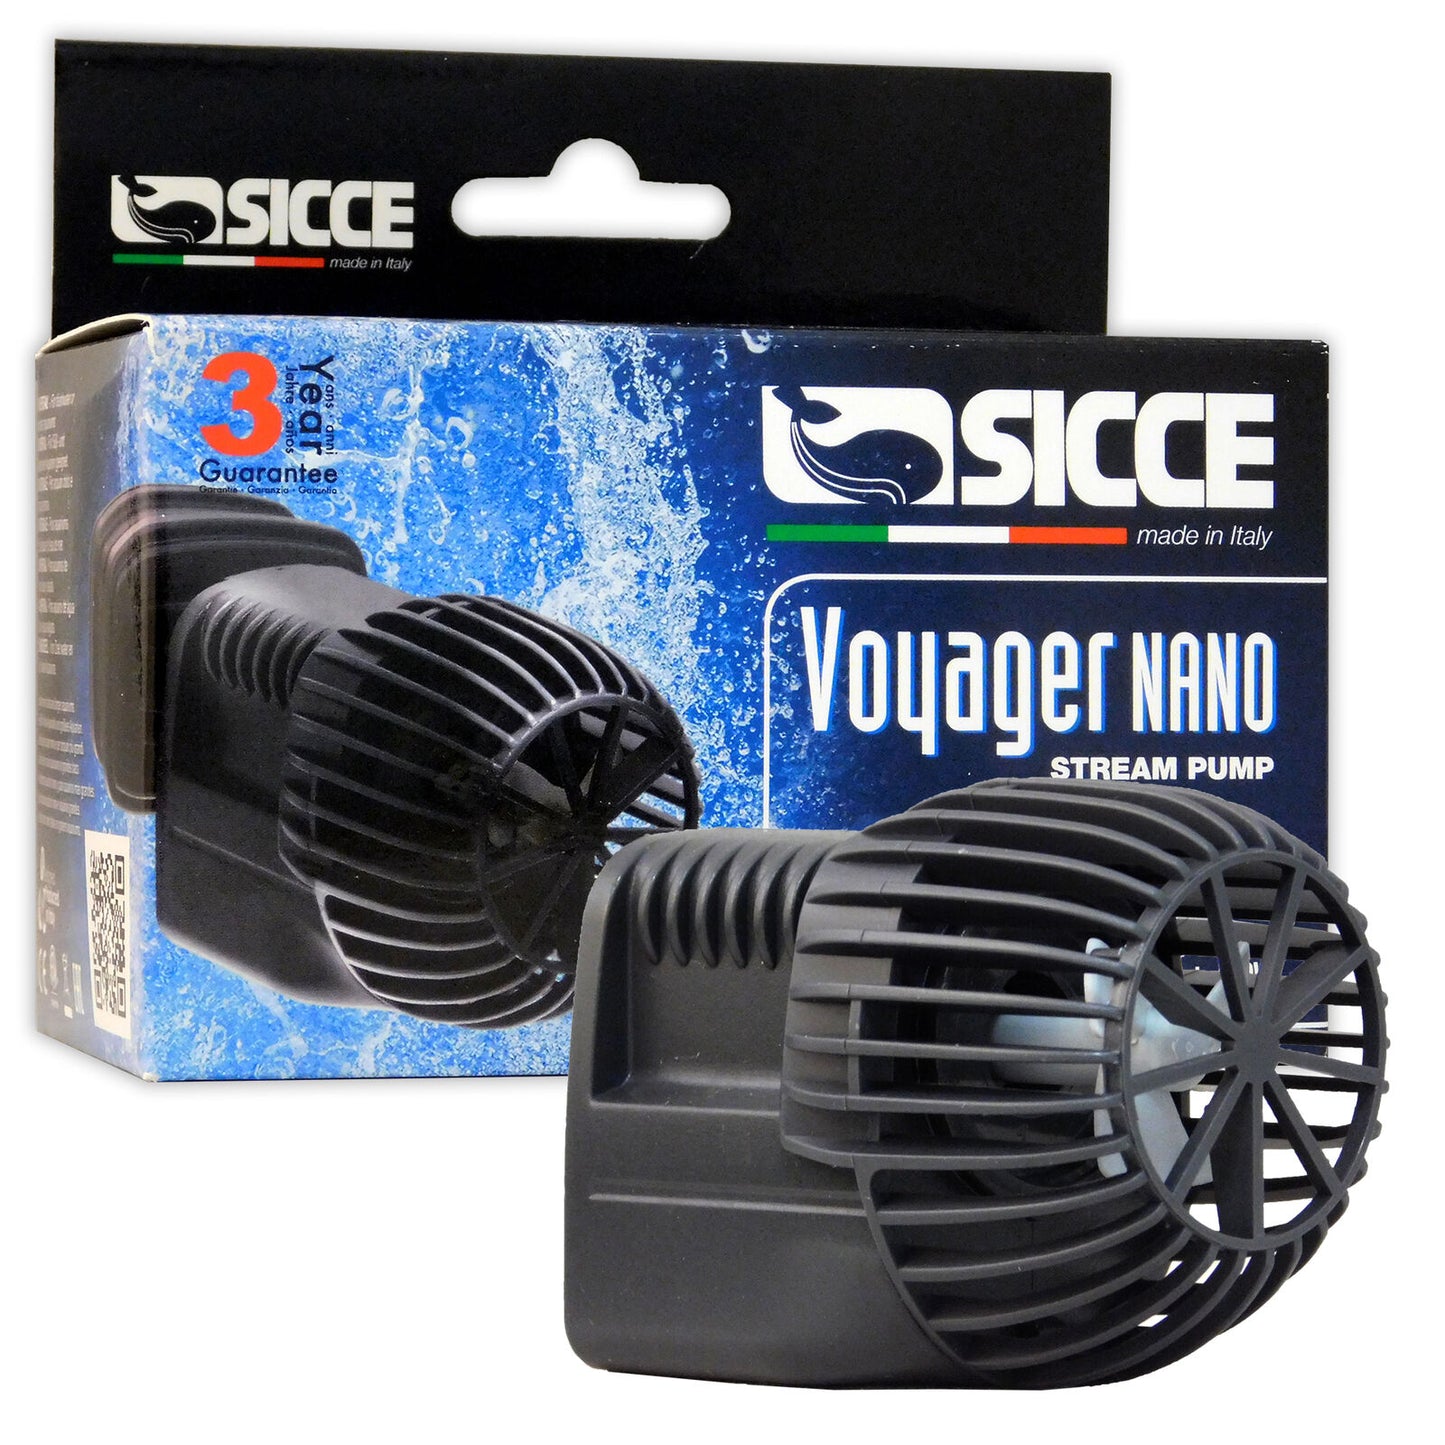 Sicce Voyager NANO - stream pump